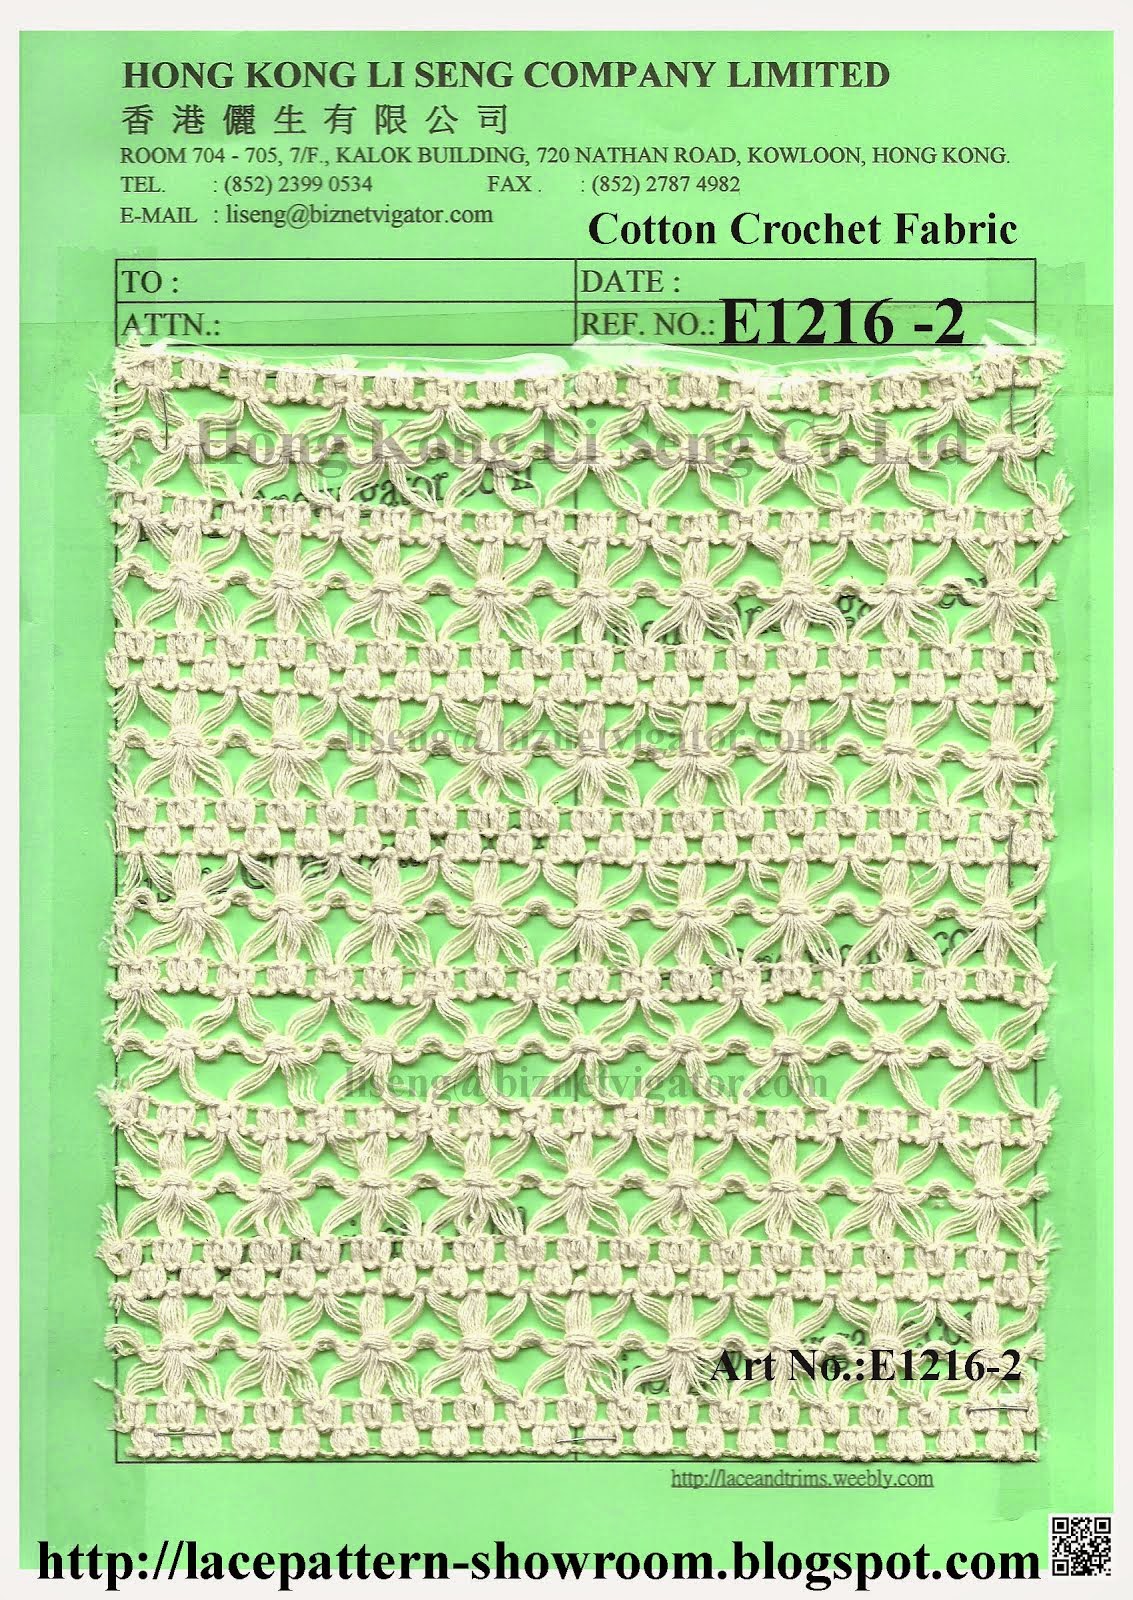 New Cotton Crochet Lace Fabric Manufacturer Wholesale and Supplier - Hong Kong Li Seng Co Ltd